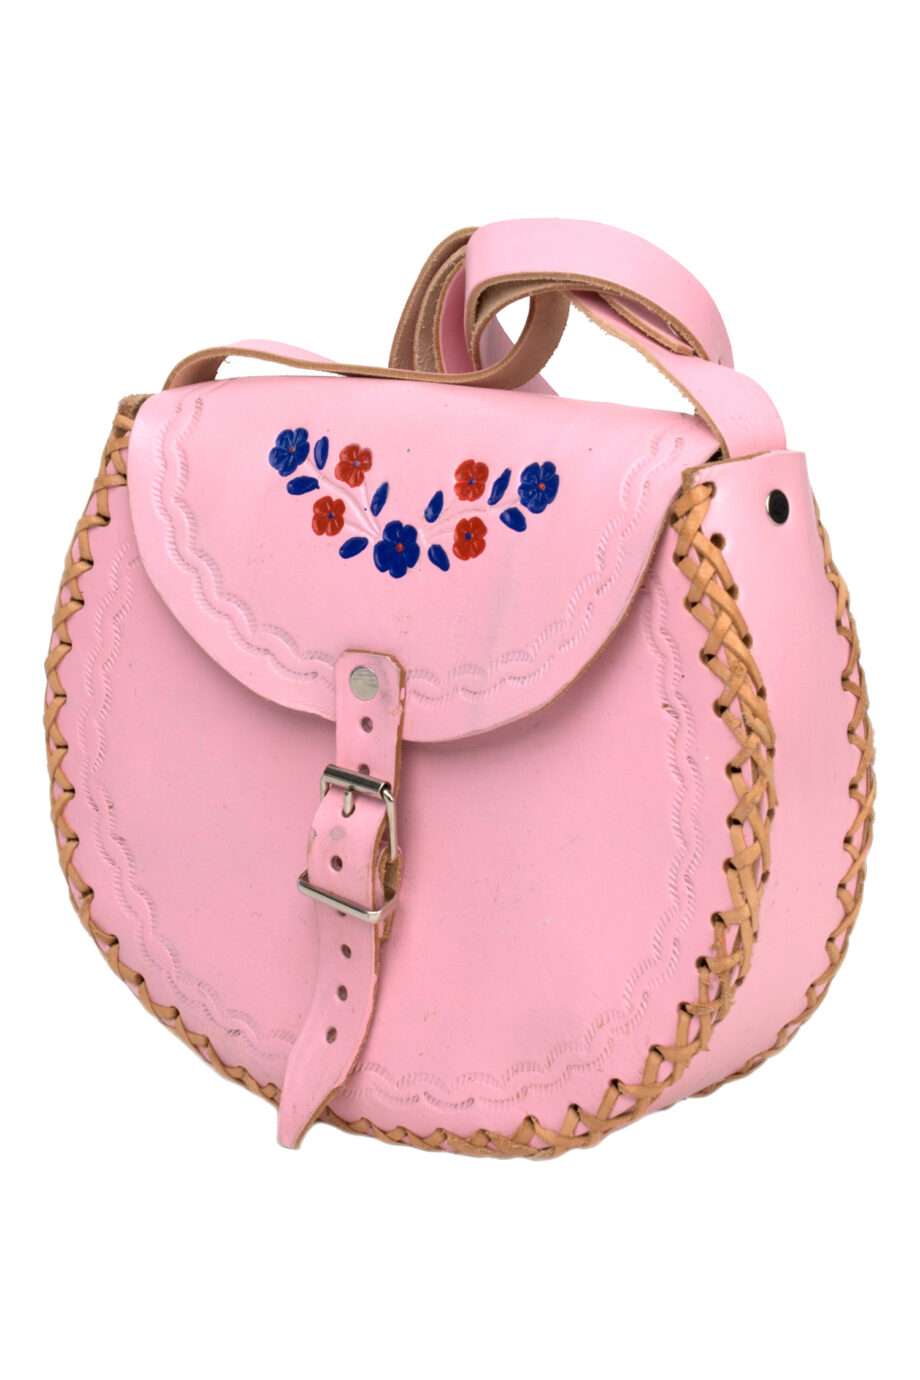 basic baby pink leather bag large